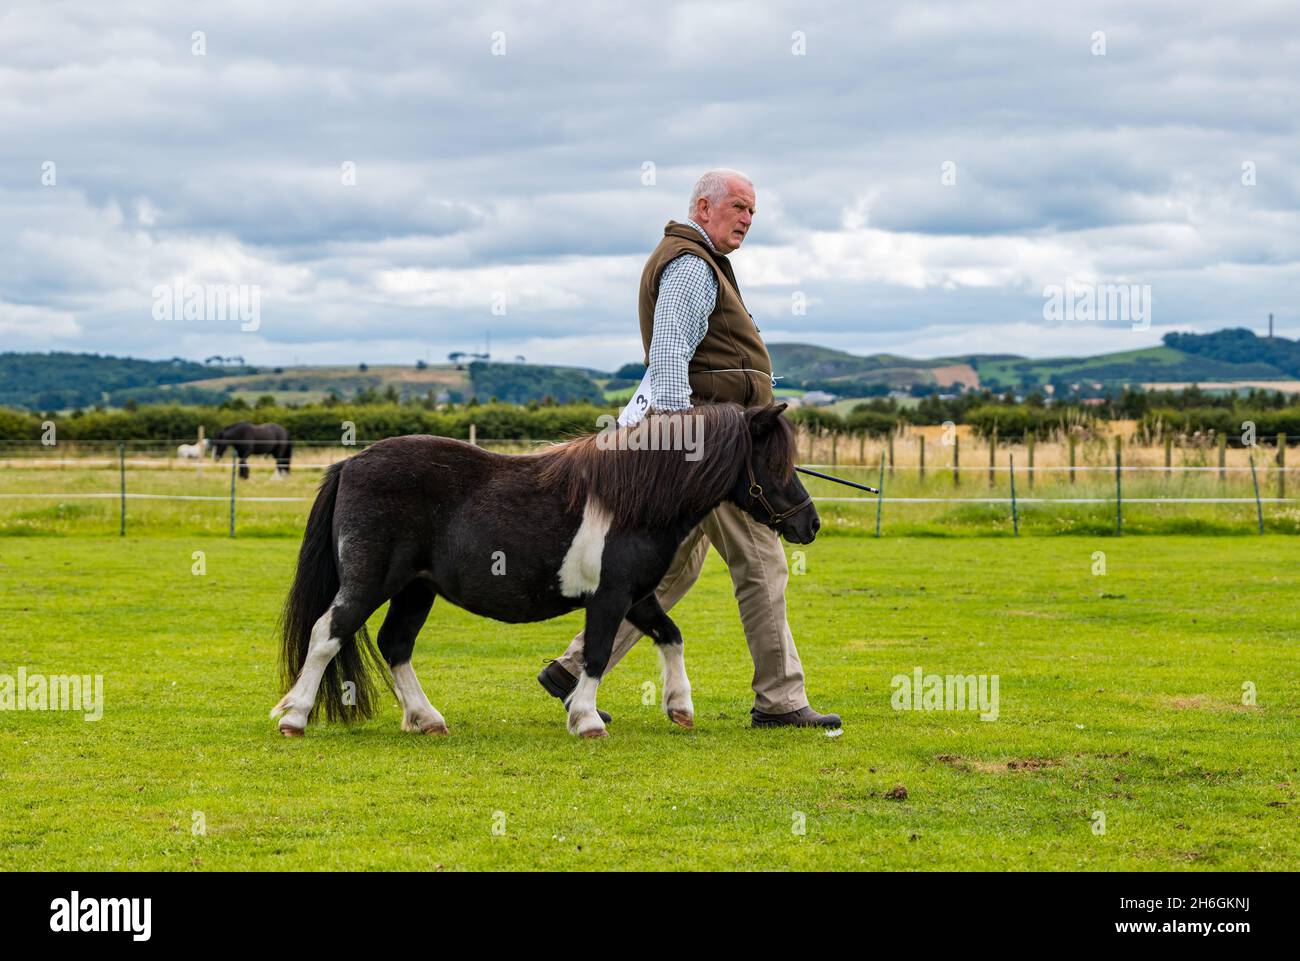 Summer horse show: a senior man leading a miniature Shetland pony in a field, East Lothian, Scotland, UK Stock Photo